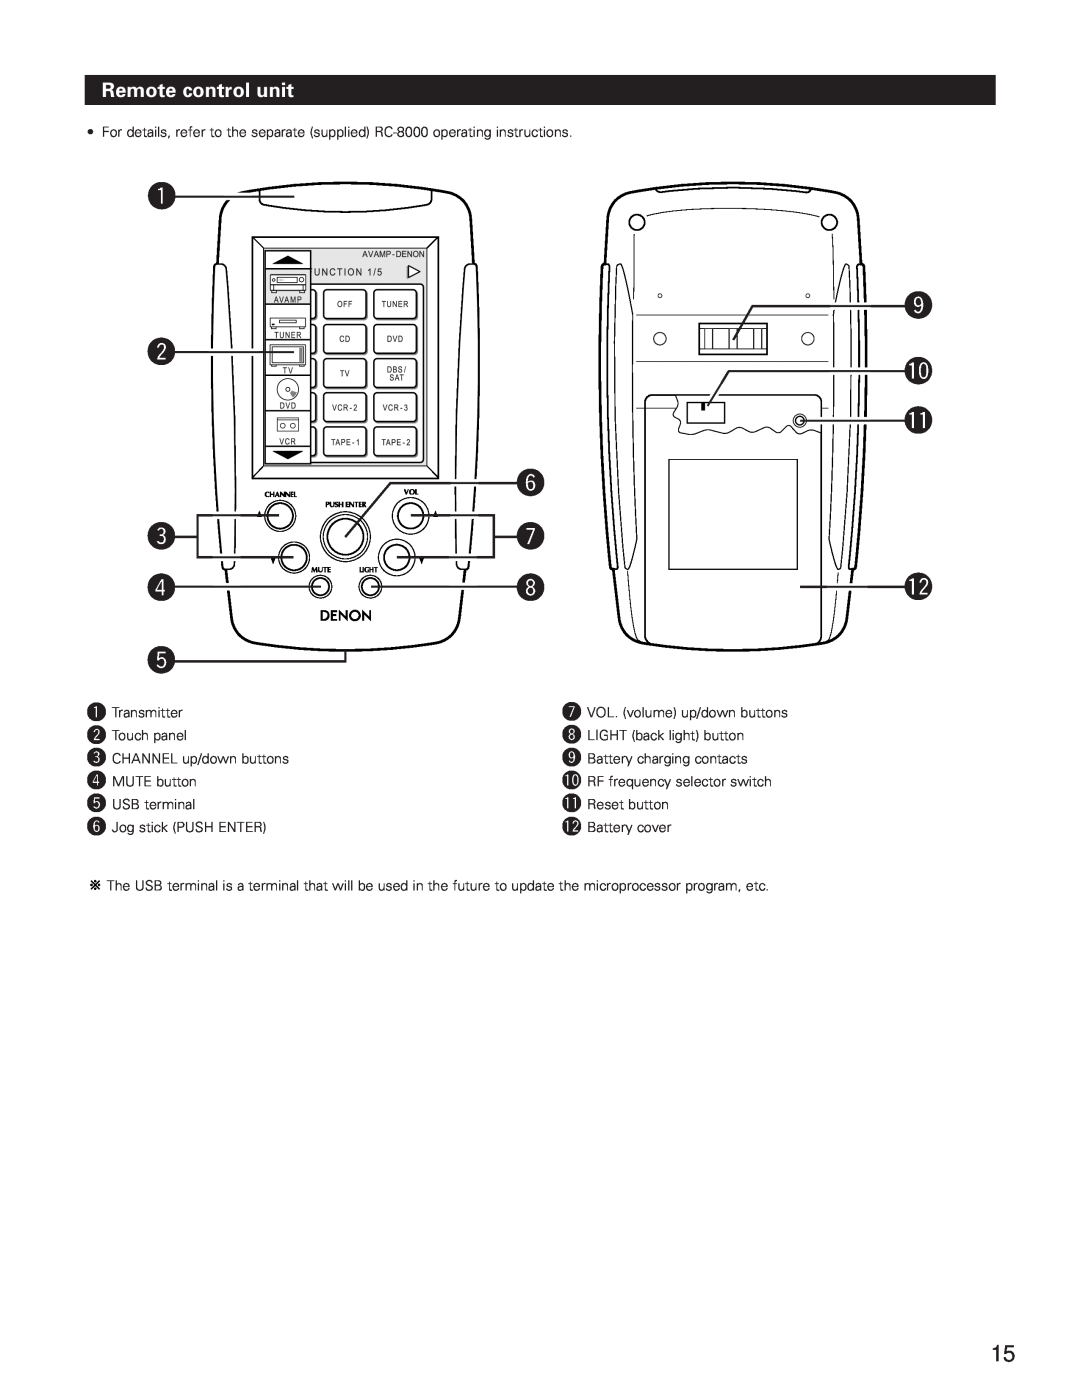 Denon AVR-5800 operating instructions Remote control unit 